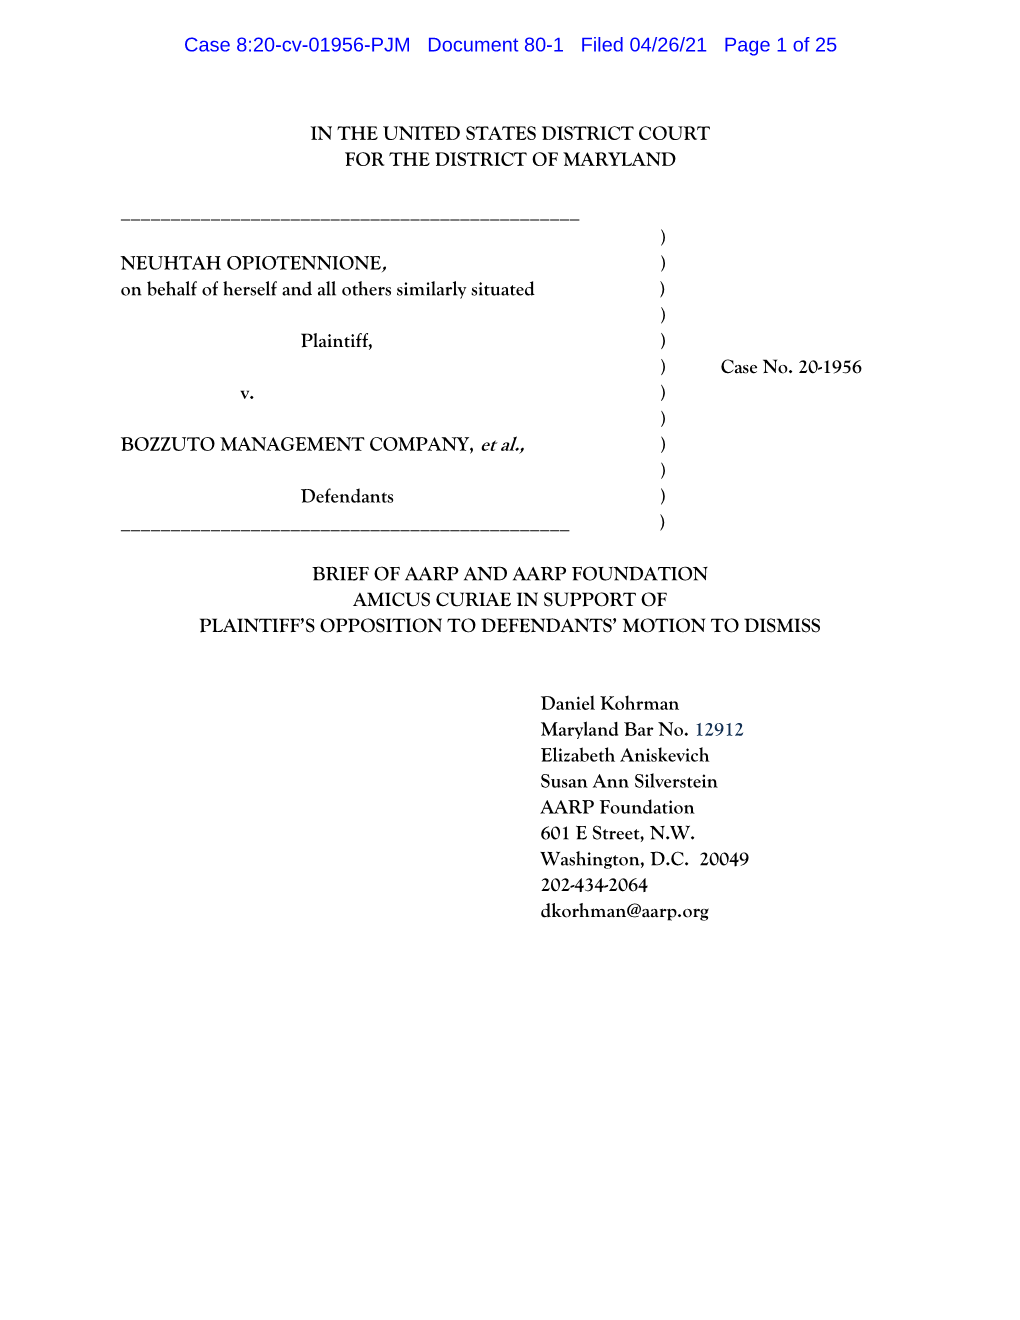 Case 8:20-Cv-01956-PJM Document 80-1 Filed 04/26/21 Page 1 of 25